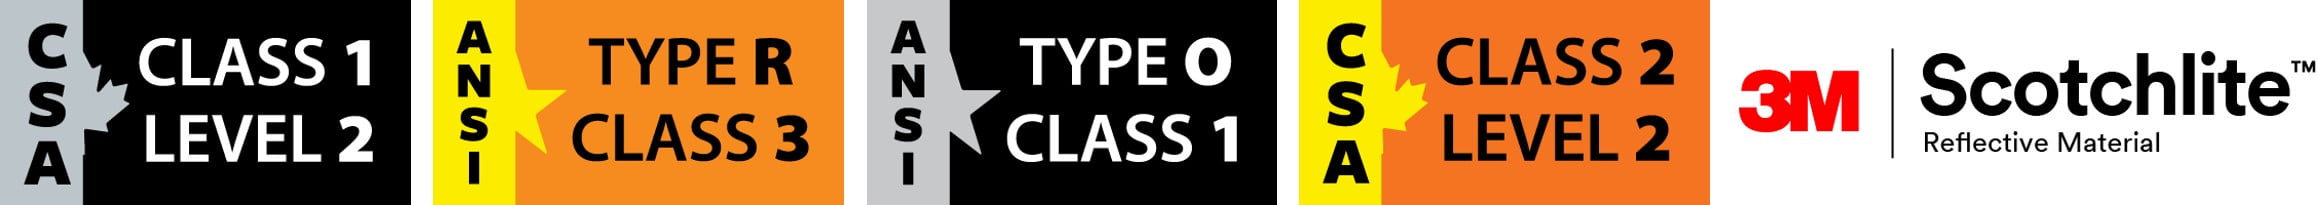 Class Level